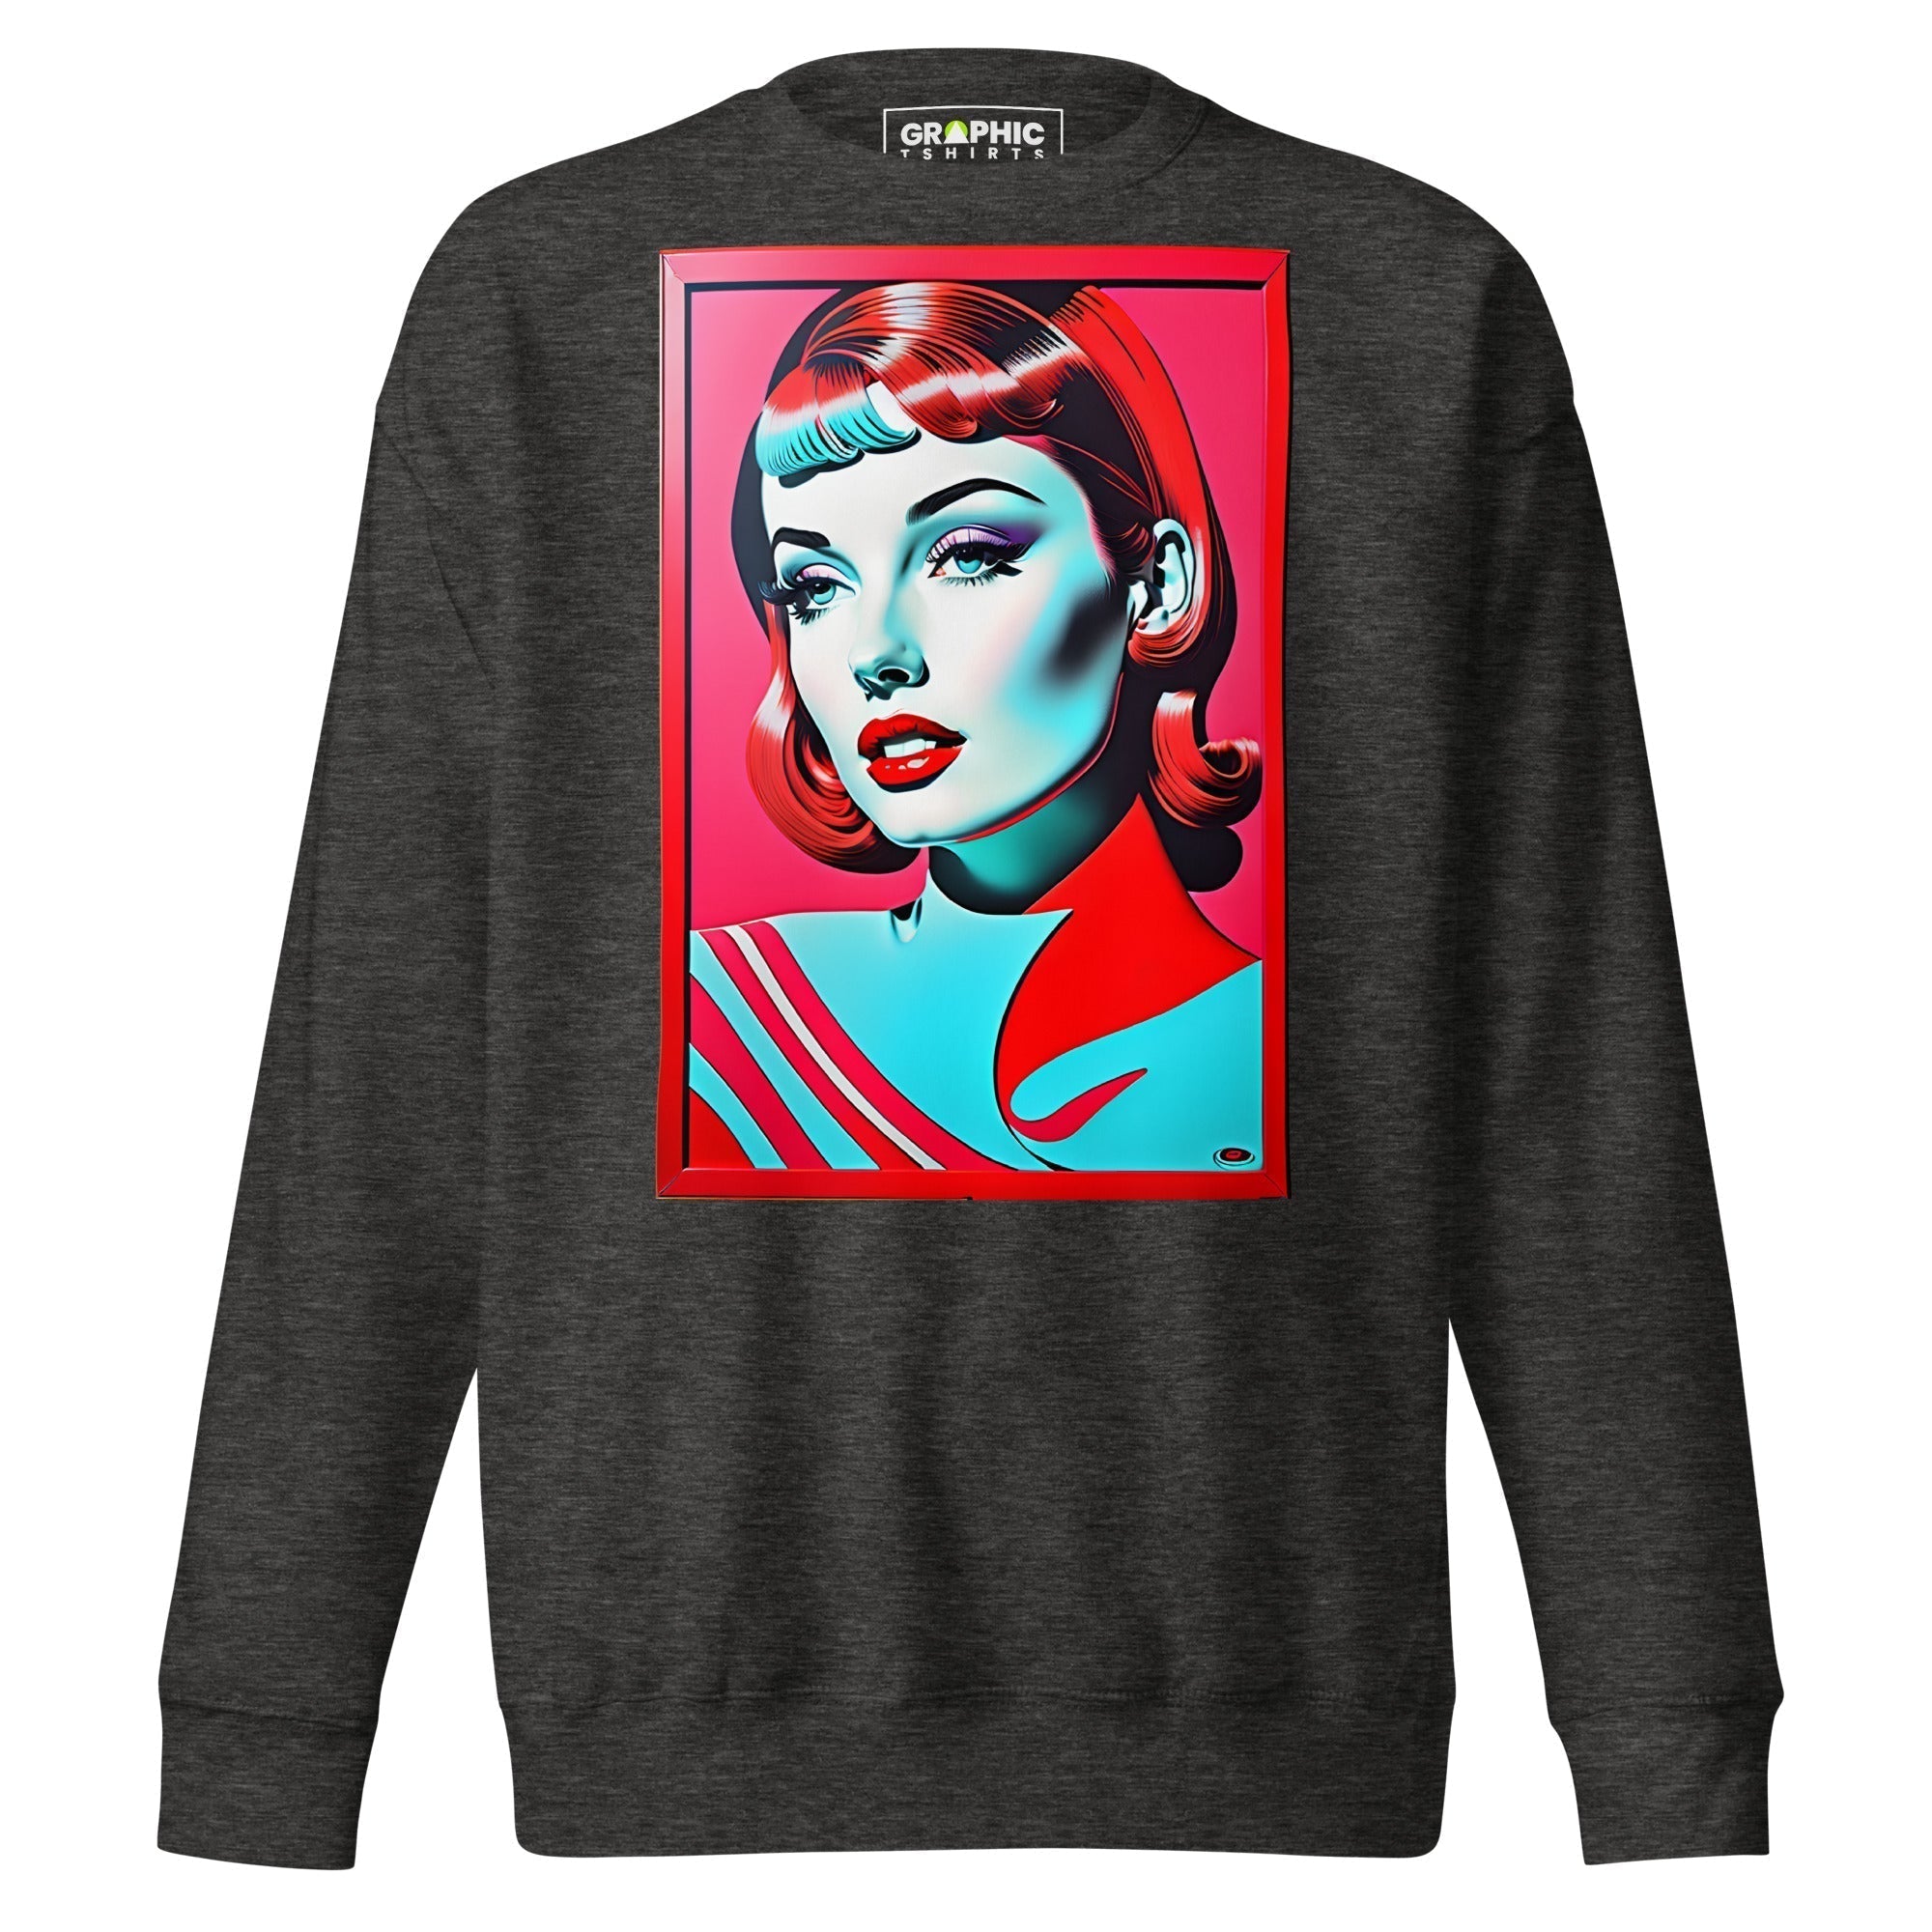 Unisex Premium Sweatshirt - Vintage American Superstar Series v.20 - GRAPHIC T-SHIRTS